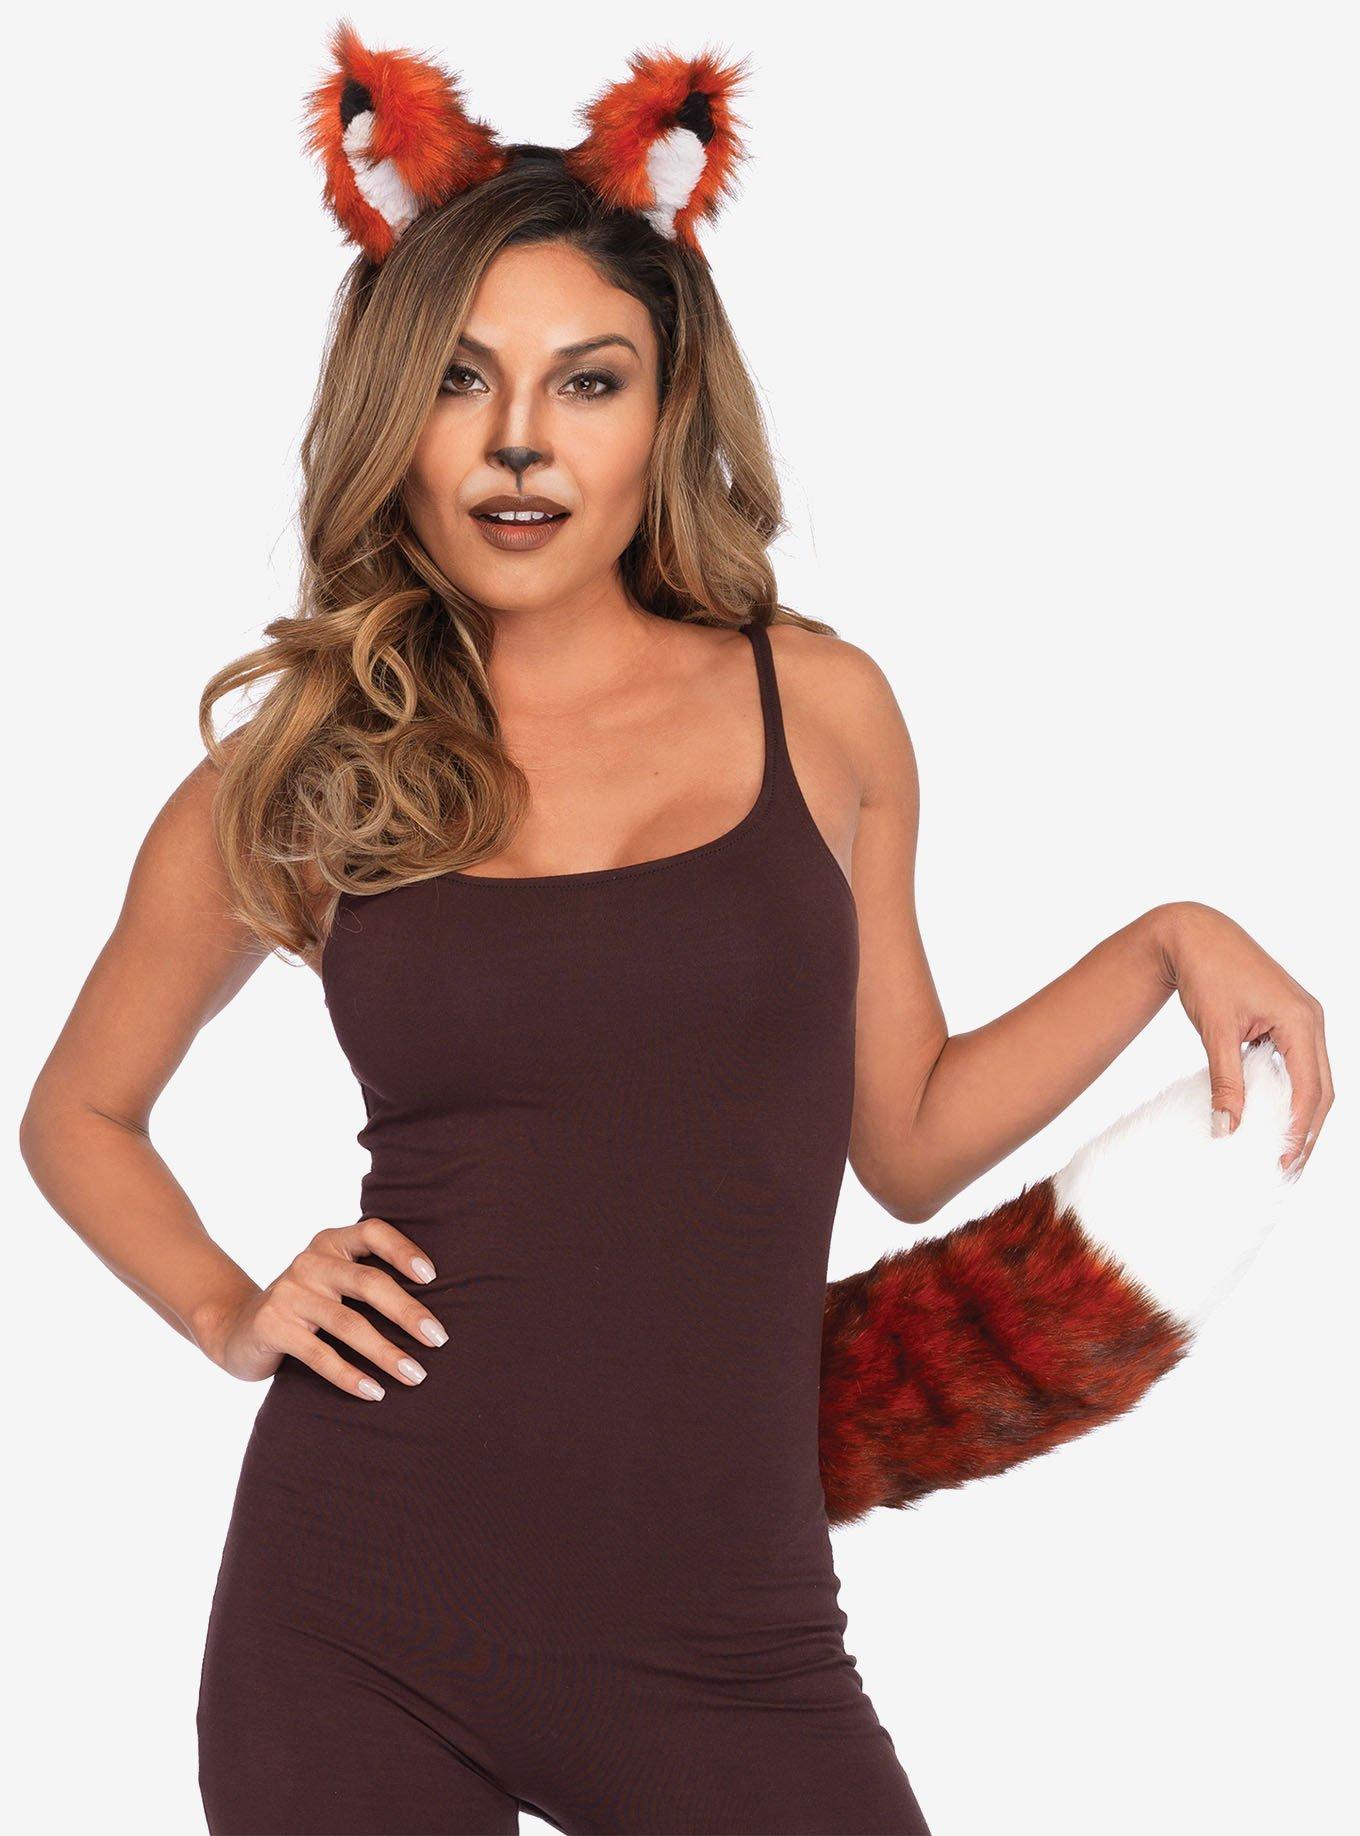 Foxy Costume Accessory Kit, , hi-res